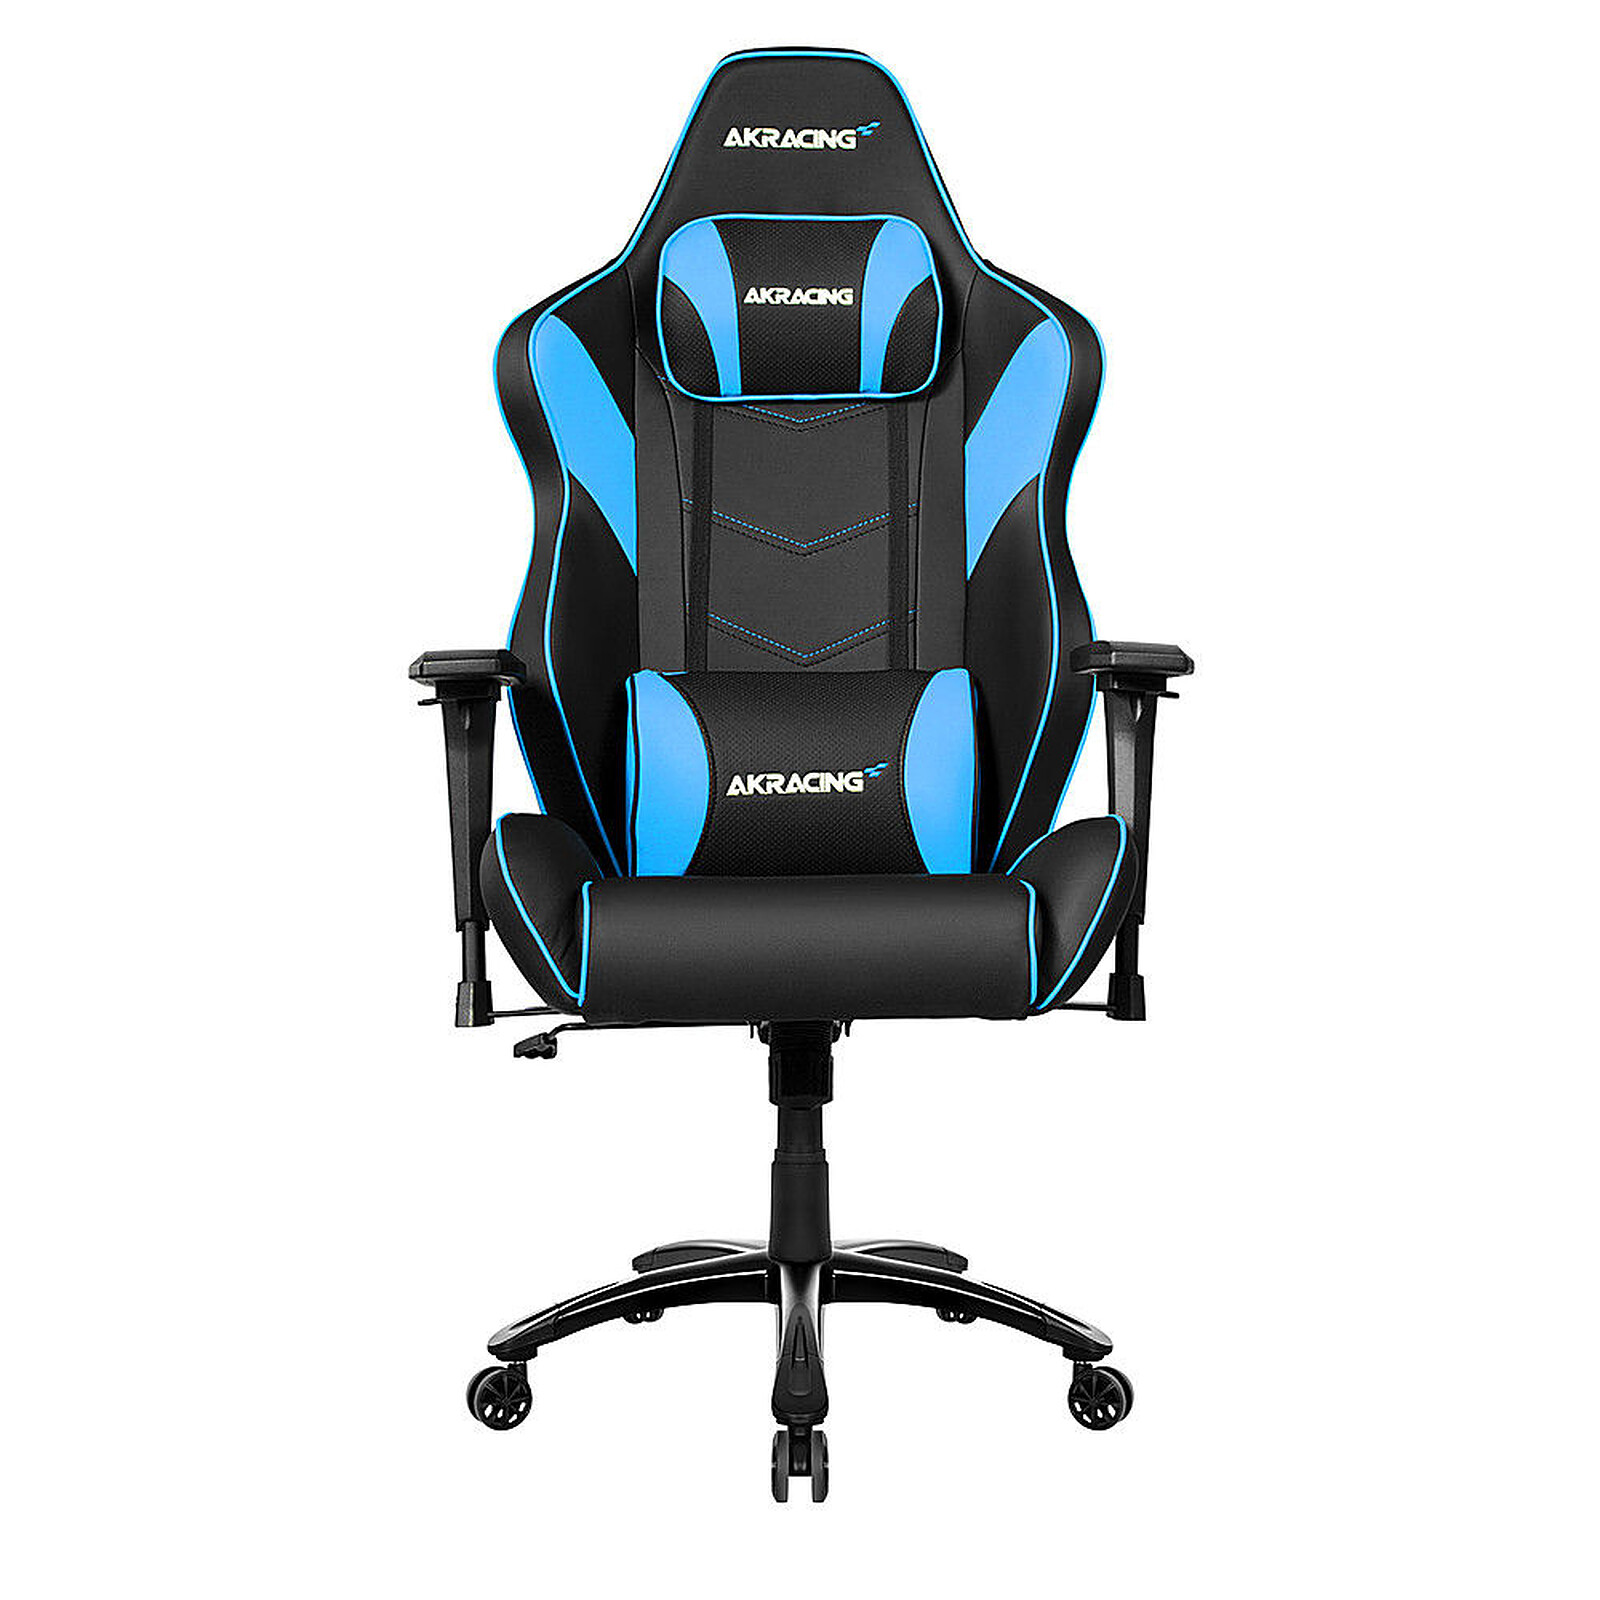 AKRacing Core LX Plus (black/blue) - Gaming chair - LDLC 3-year warranty